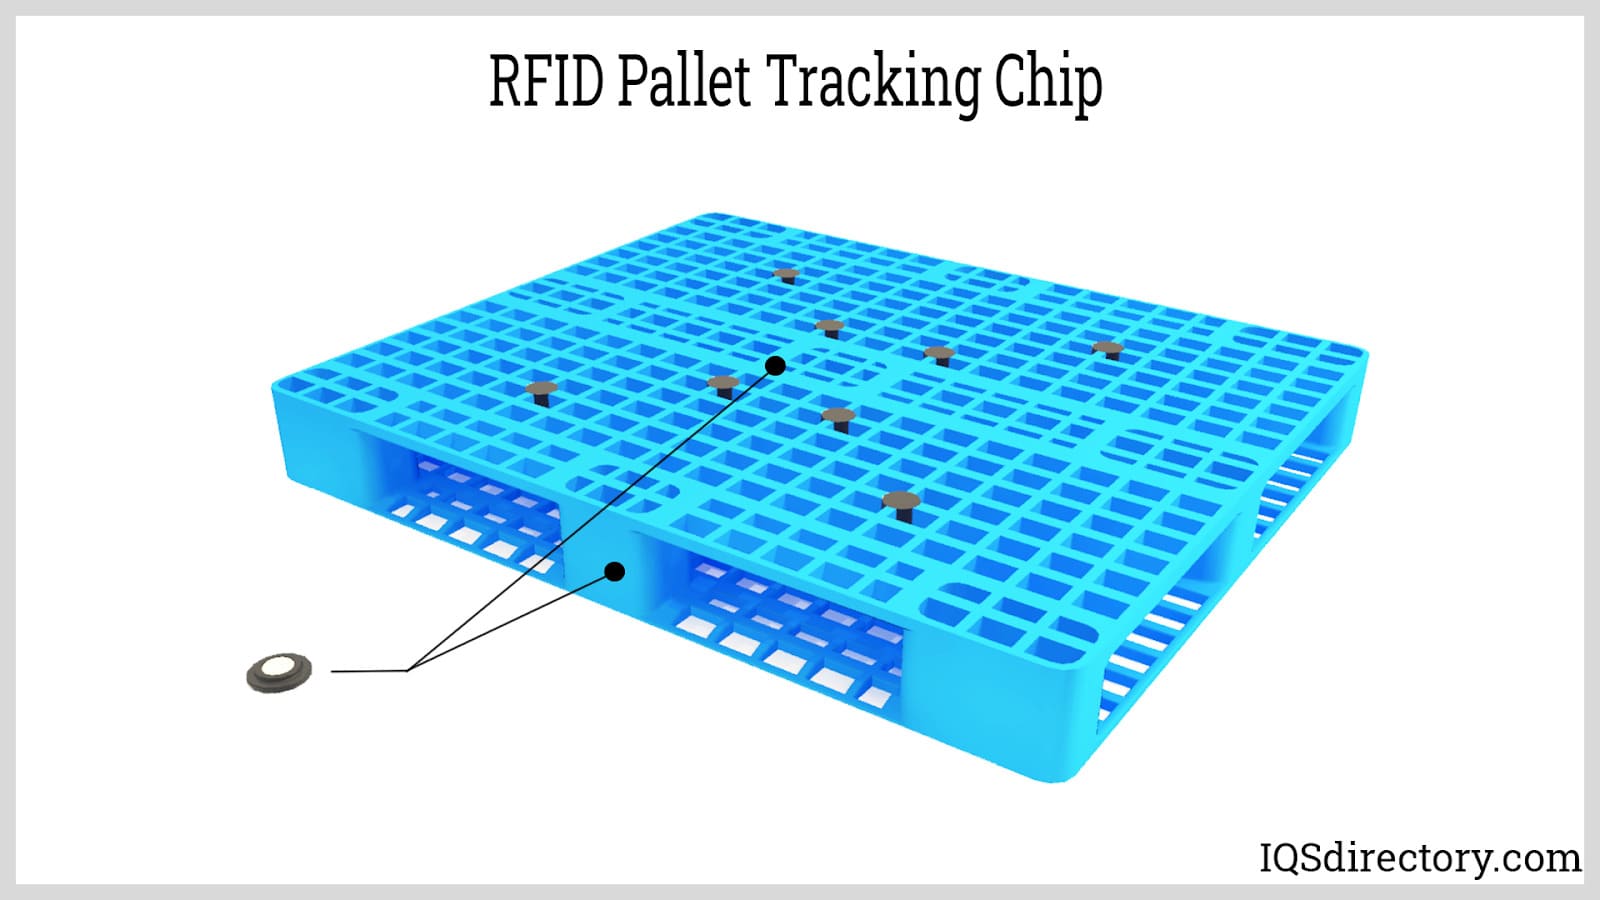 RFID Pallet Tracking Chip